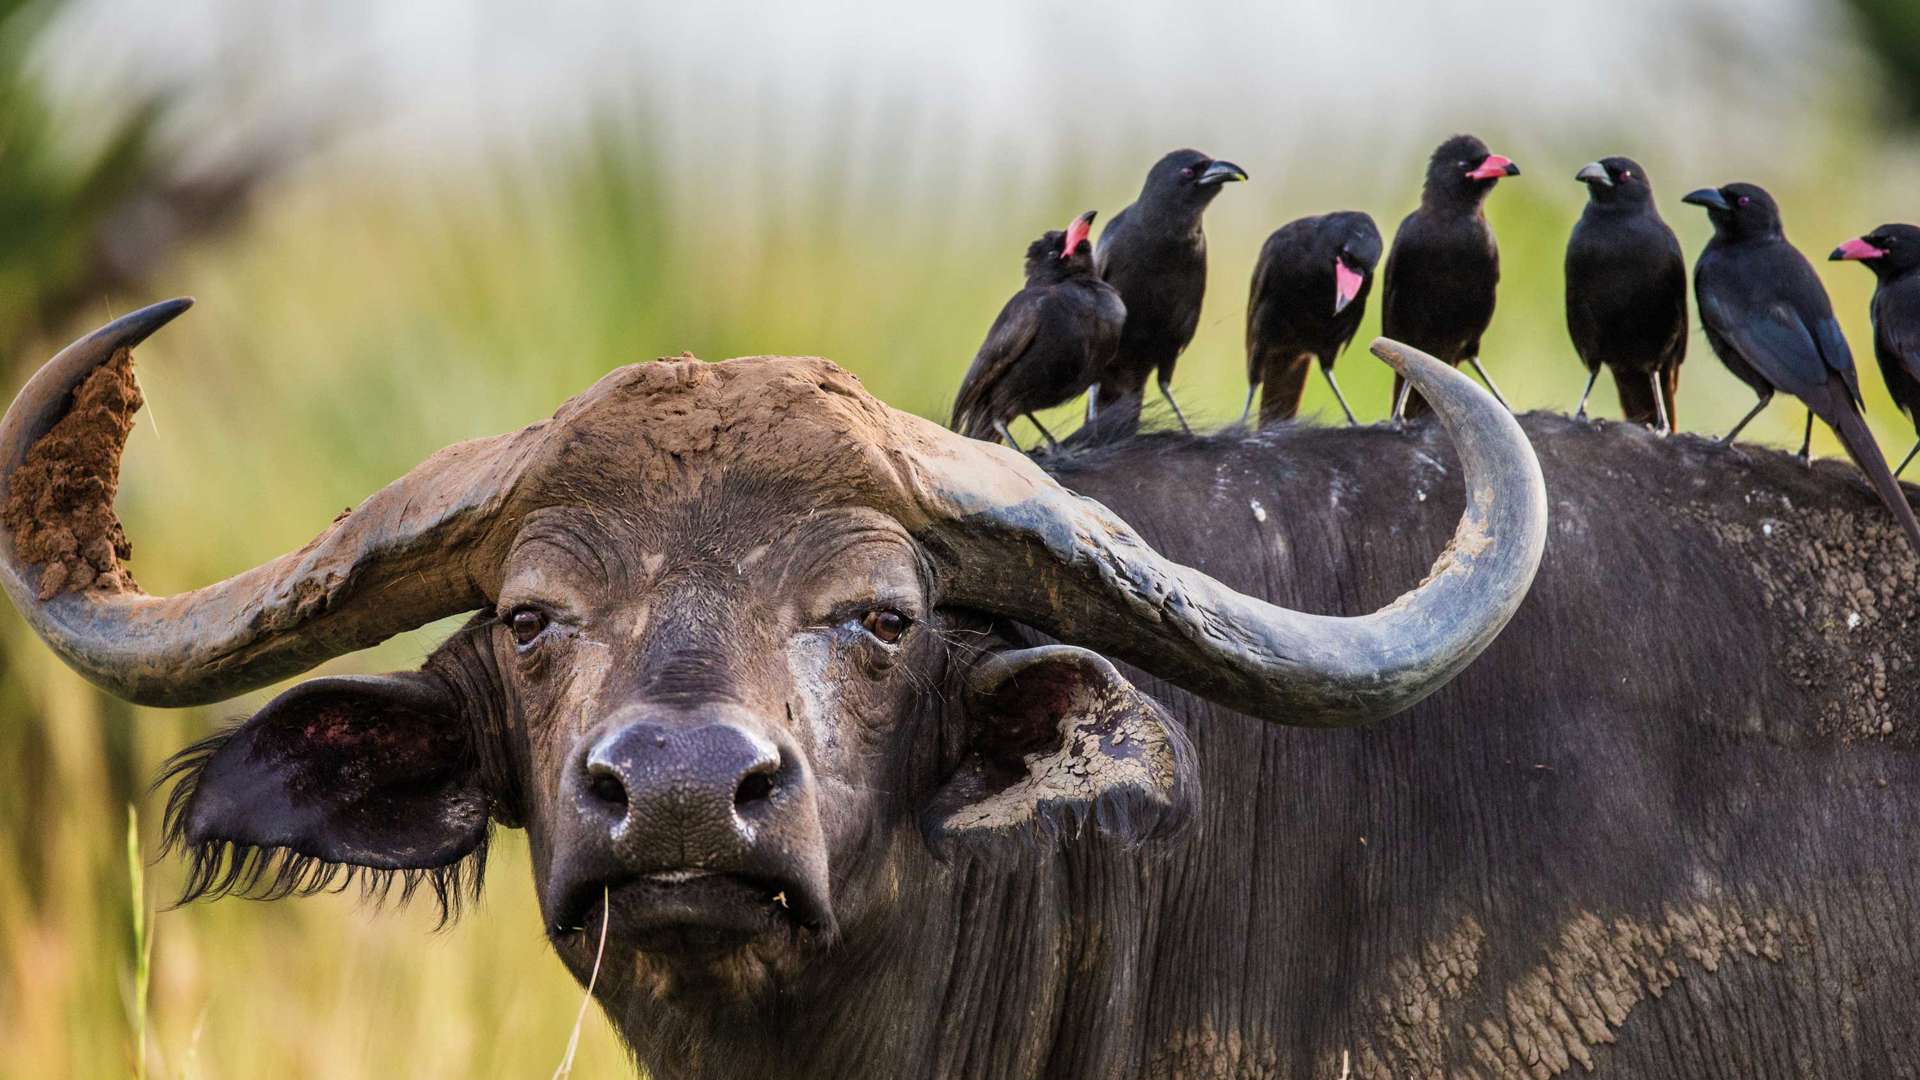 Buffalo In The Savannah With Birds On Its Back, Uganda